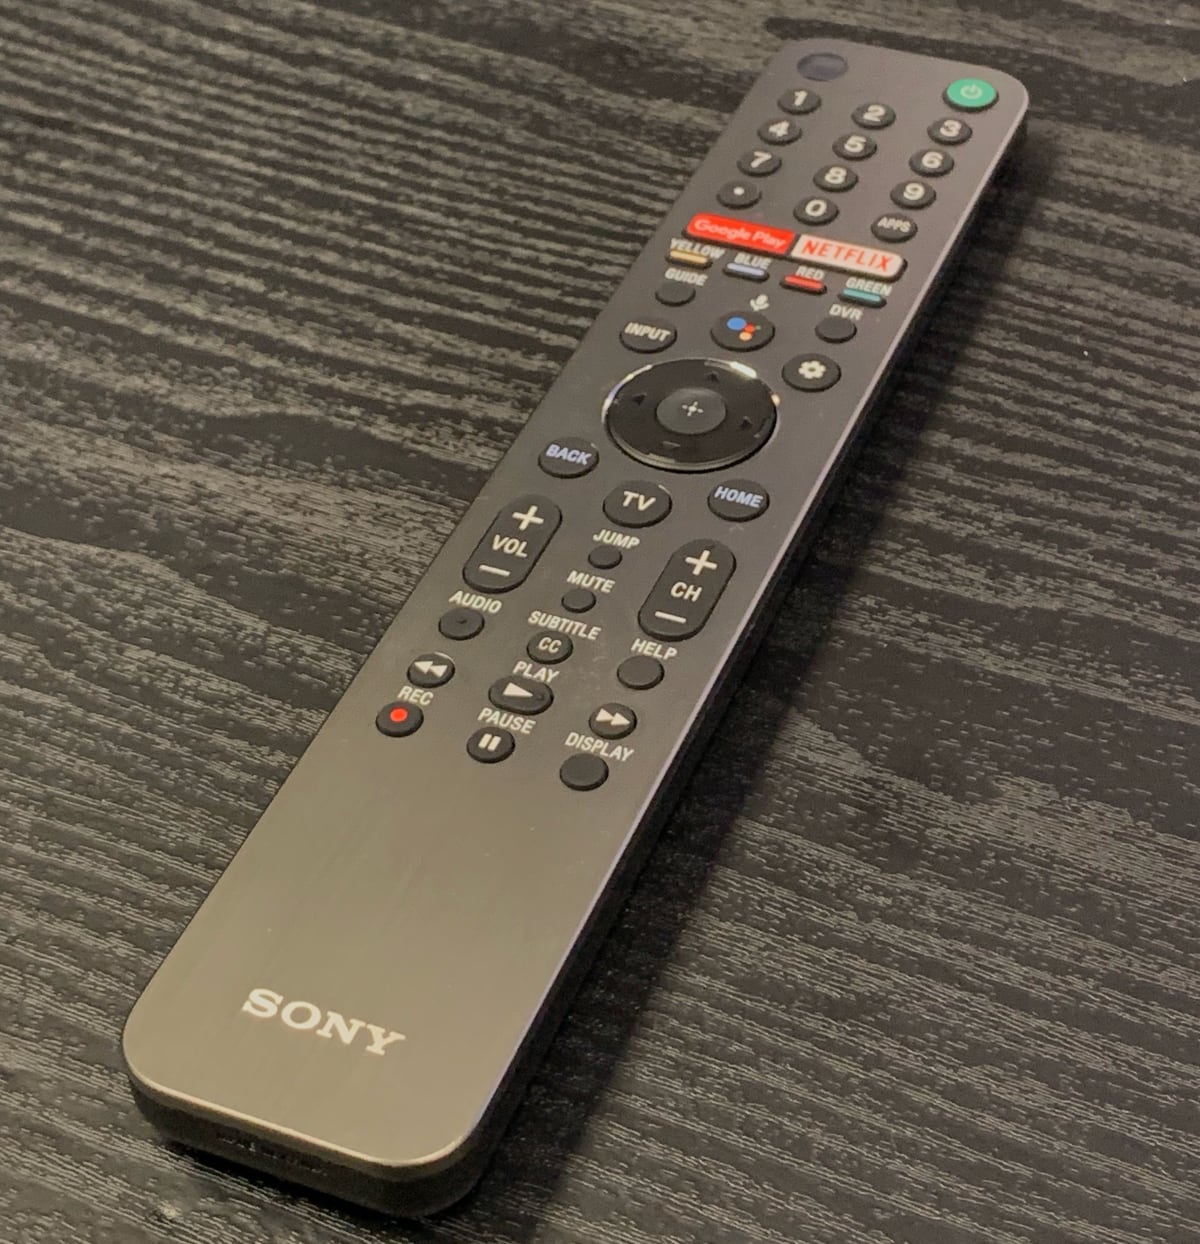 Sony 2020 TV remote control